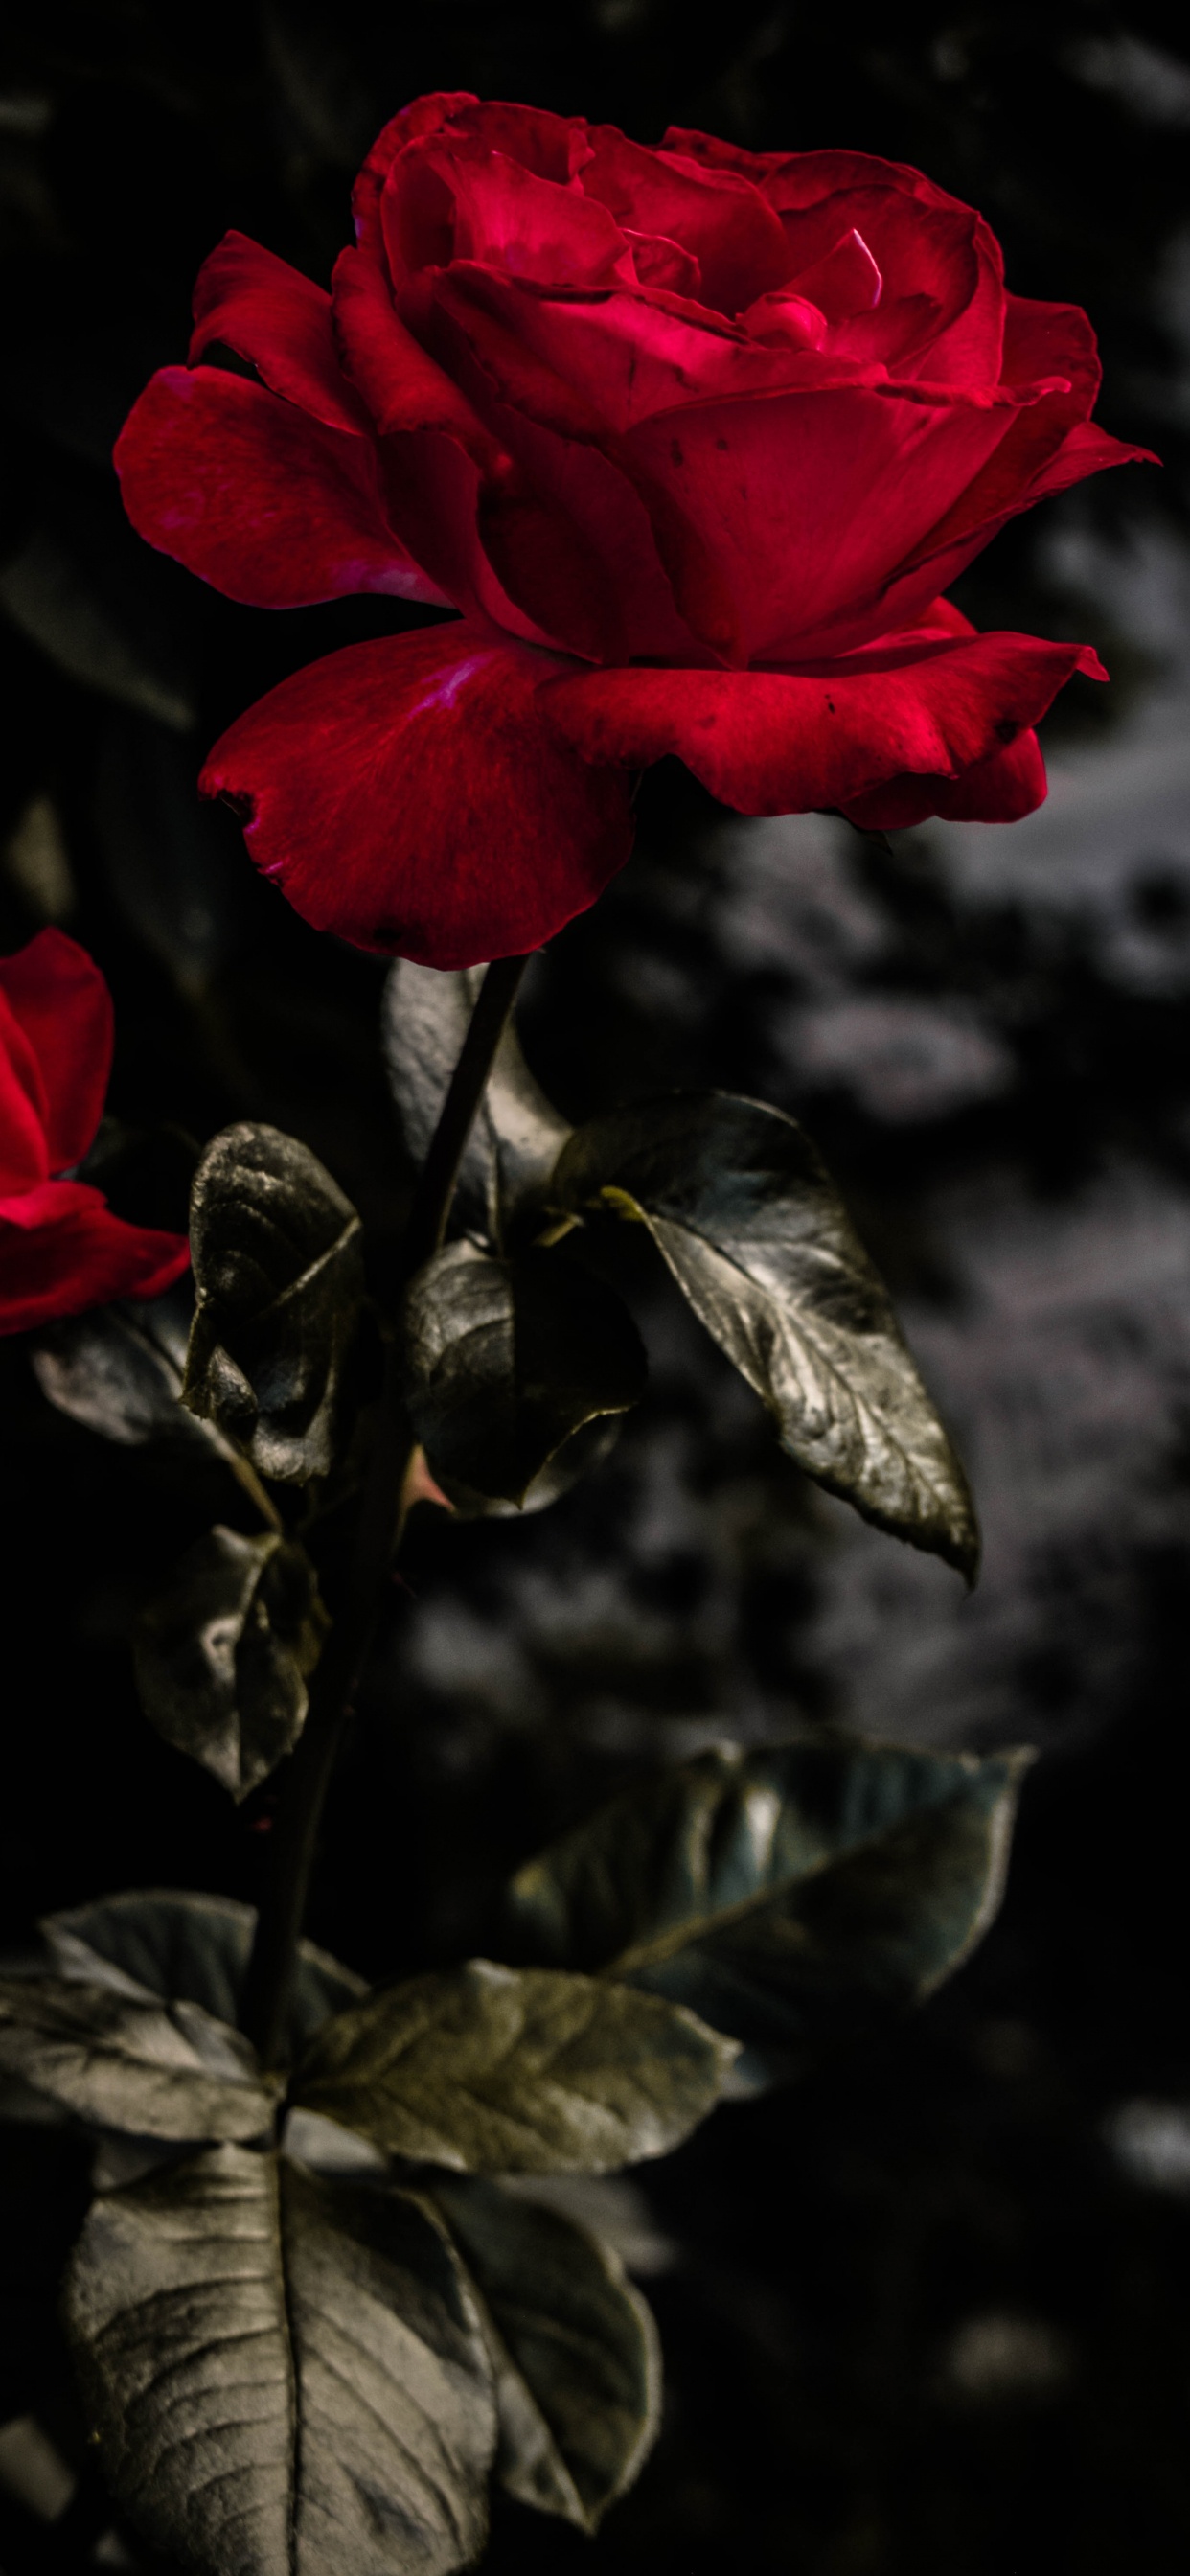 Rose Rouge en Fleurs Pendant la Journée. Wallpaper in 1242x2688 Resolution